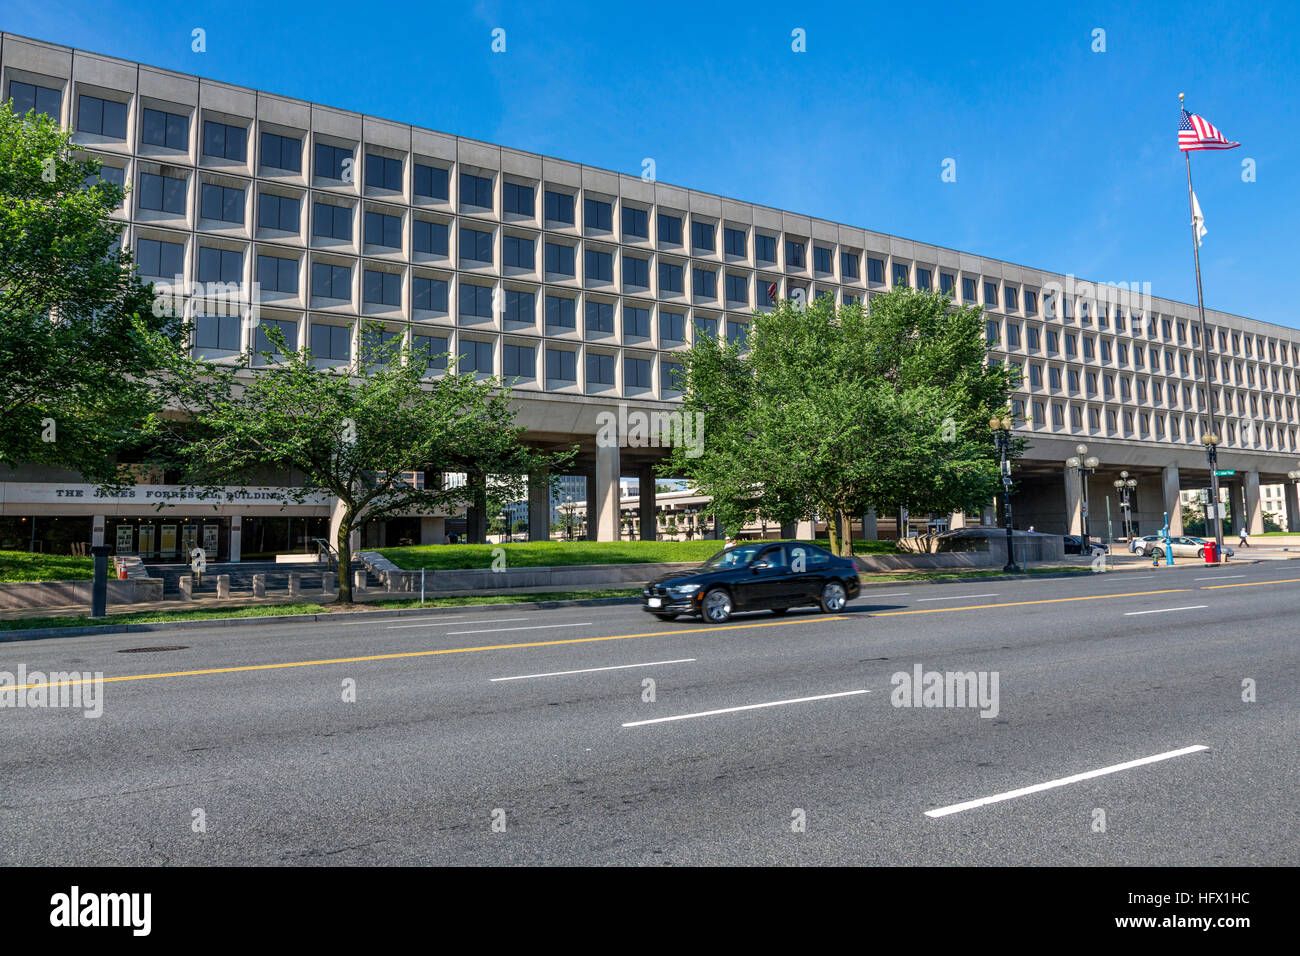 U.S. Department of Energy, James Forrestal Building, Washington, D.C. Stock Photo